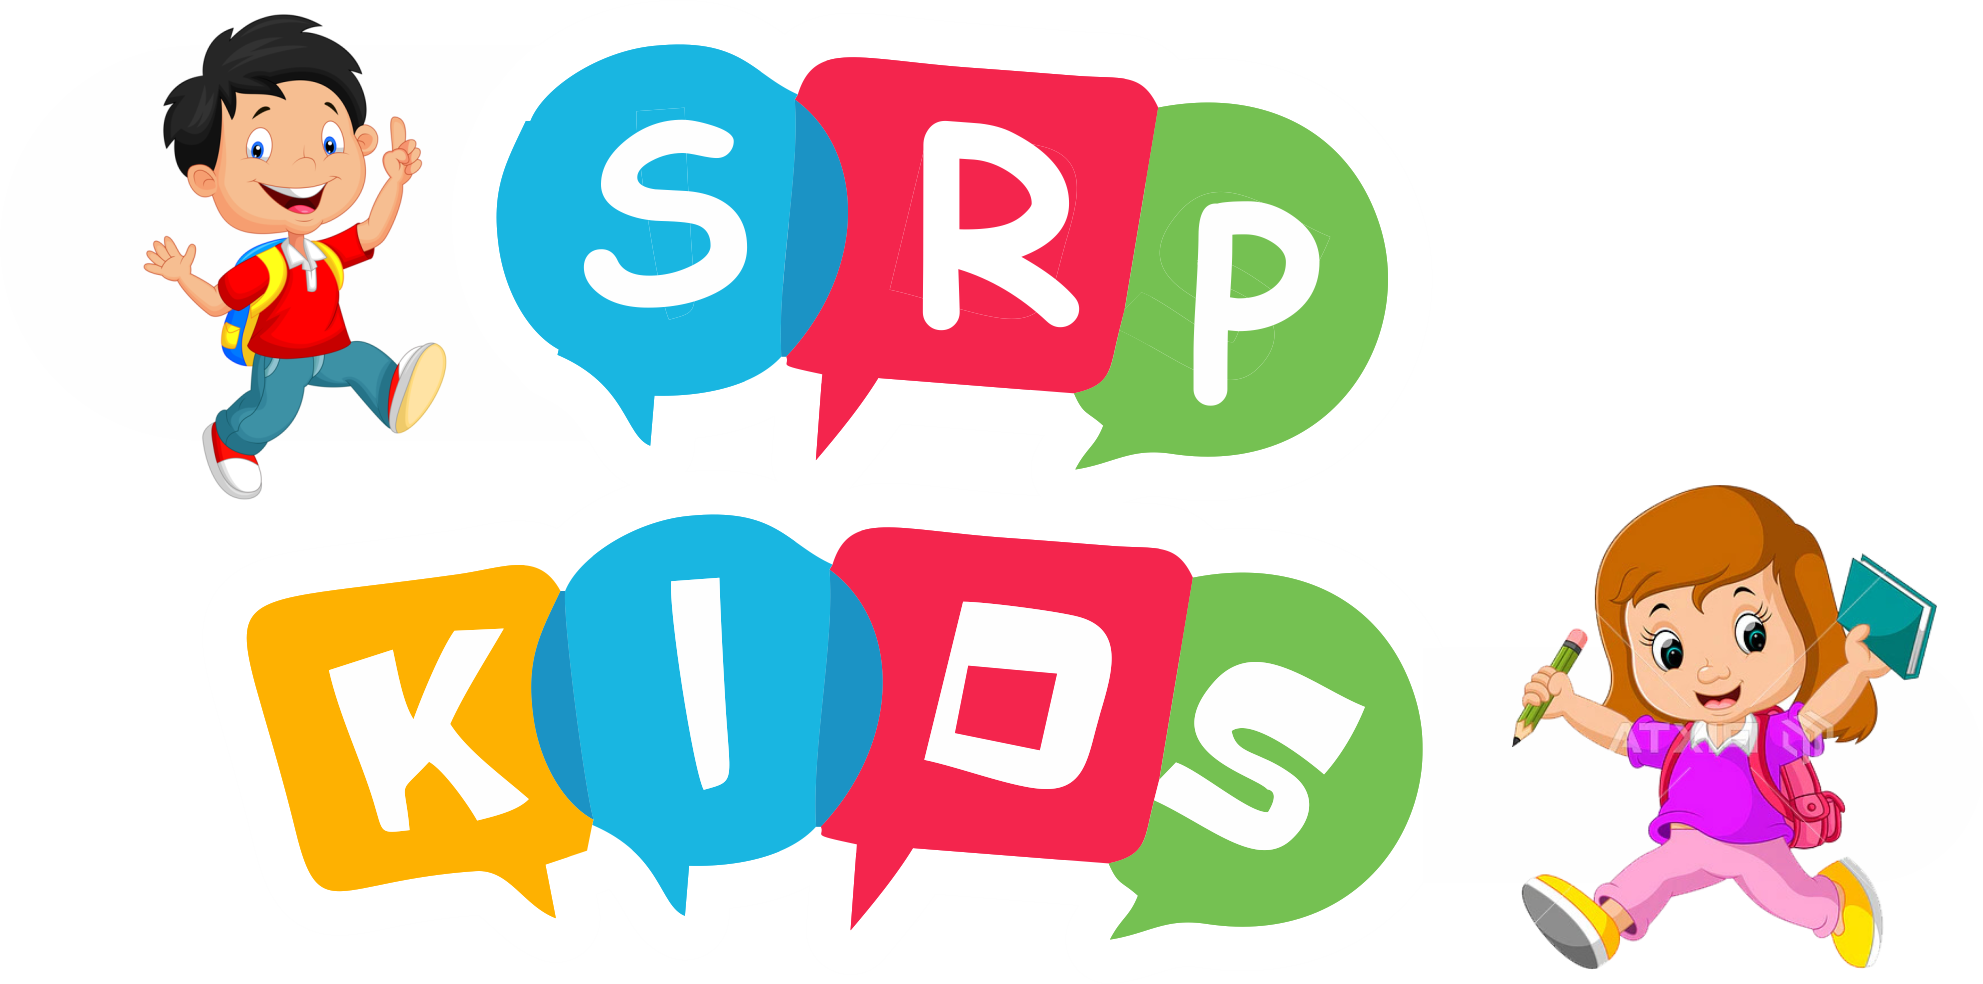 SRP logo by AirHeadBerry on DeviantArt